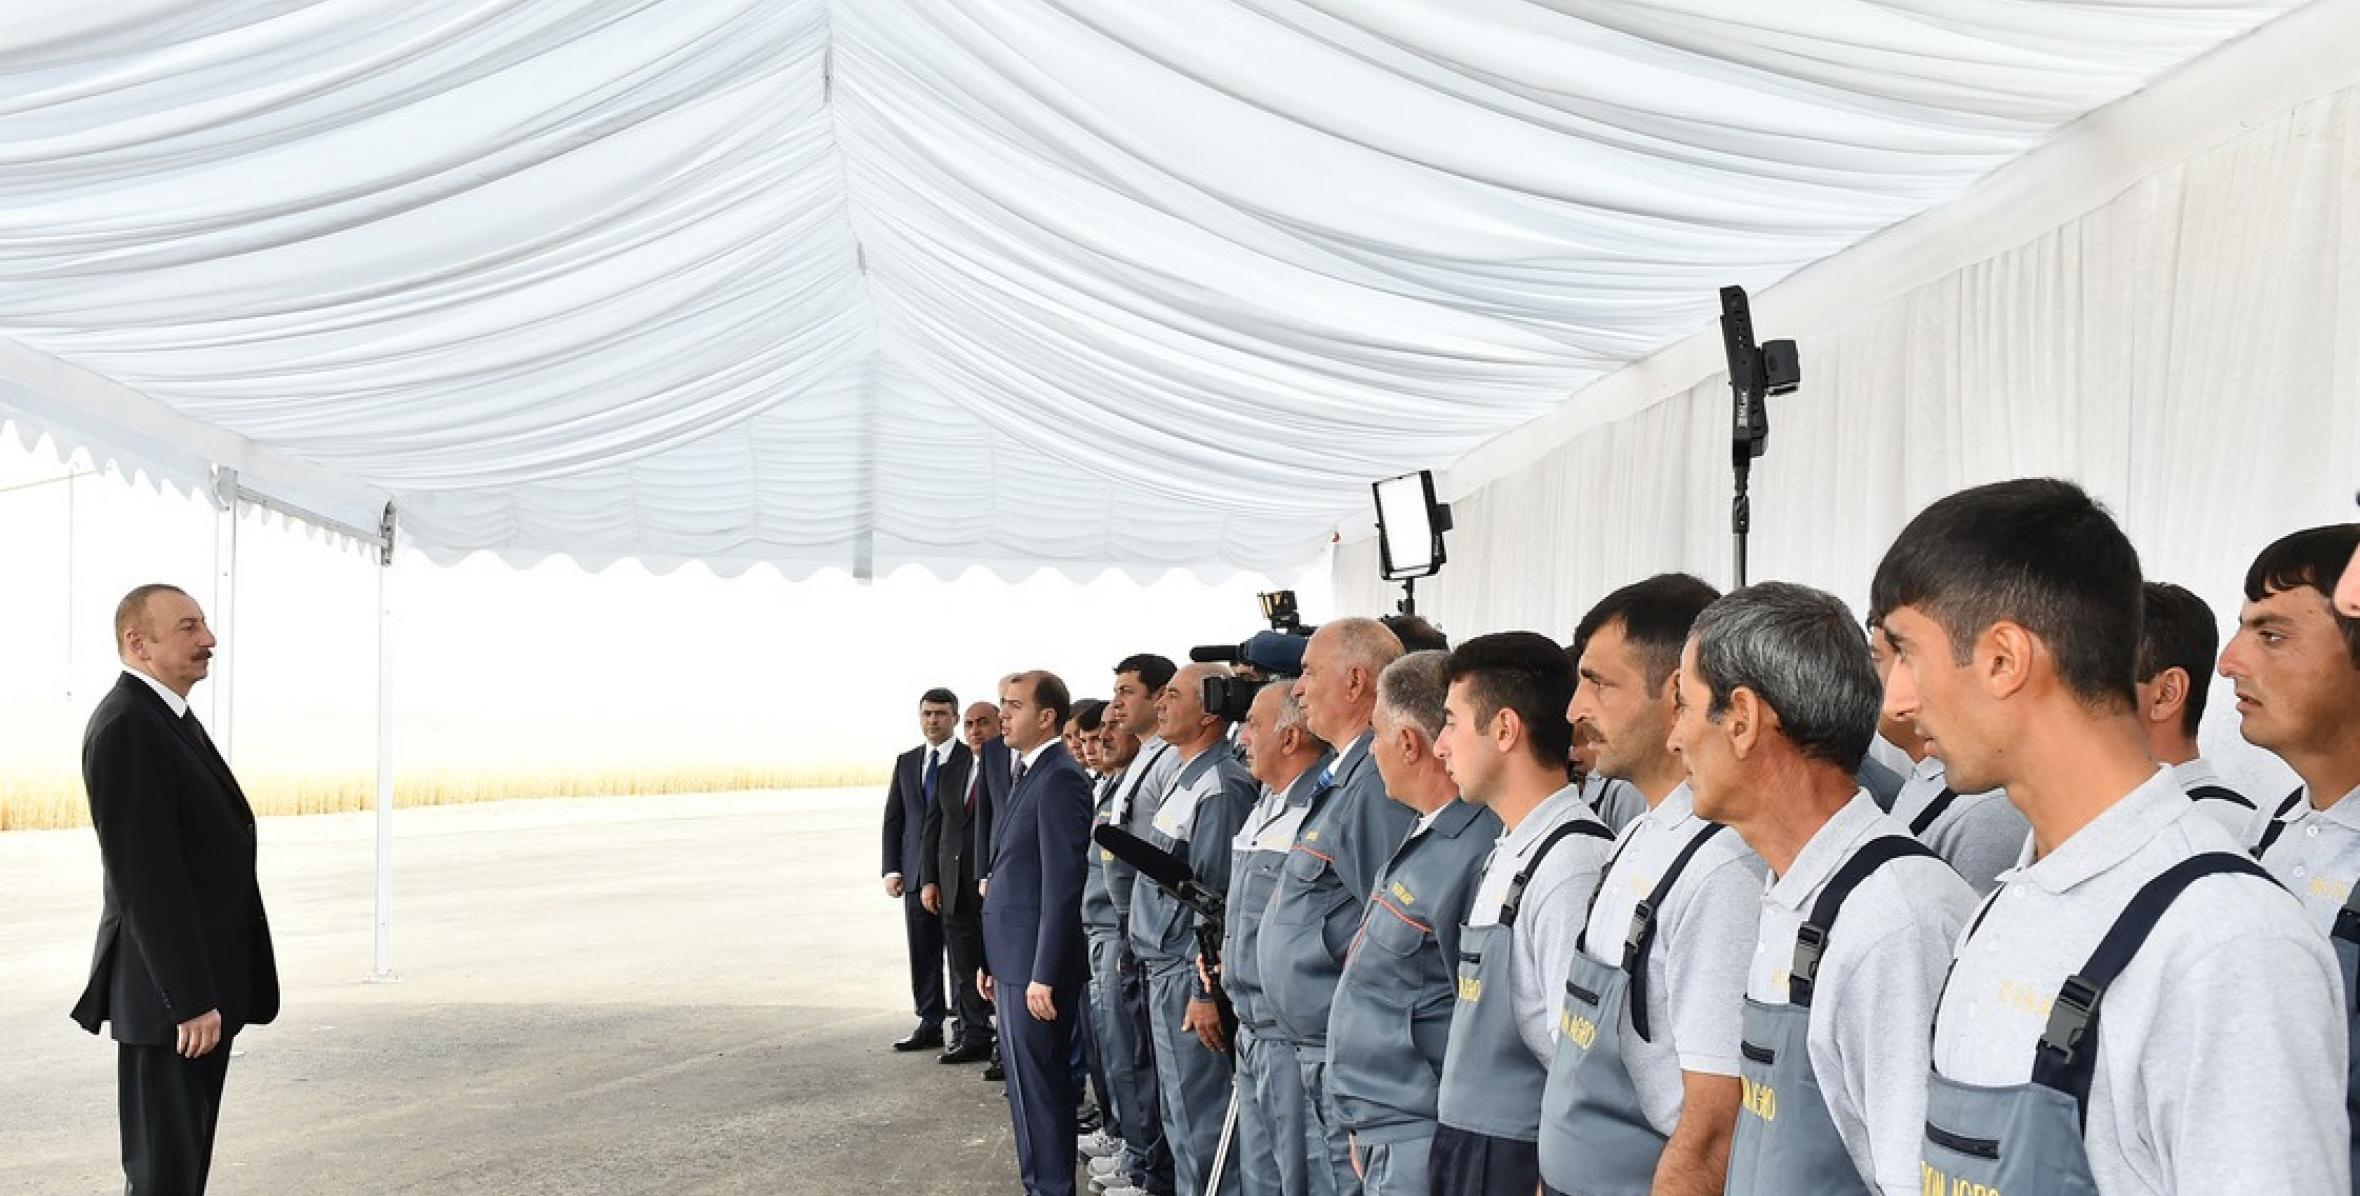 Speech by Ilham Aliyev at the opening of Region Agro LLC in Goranboy